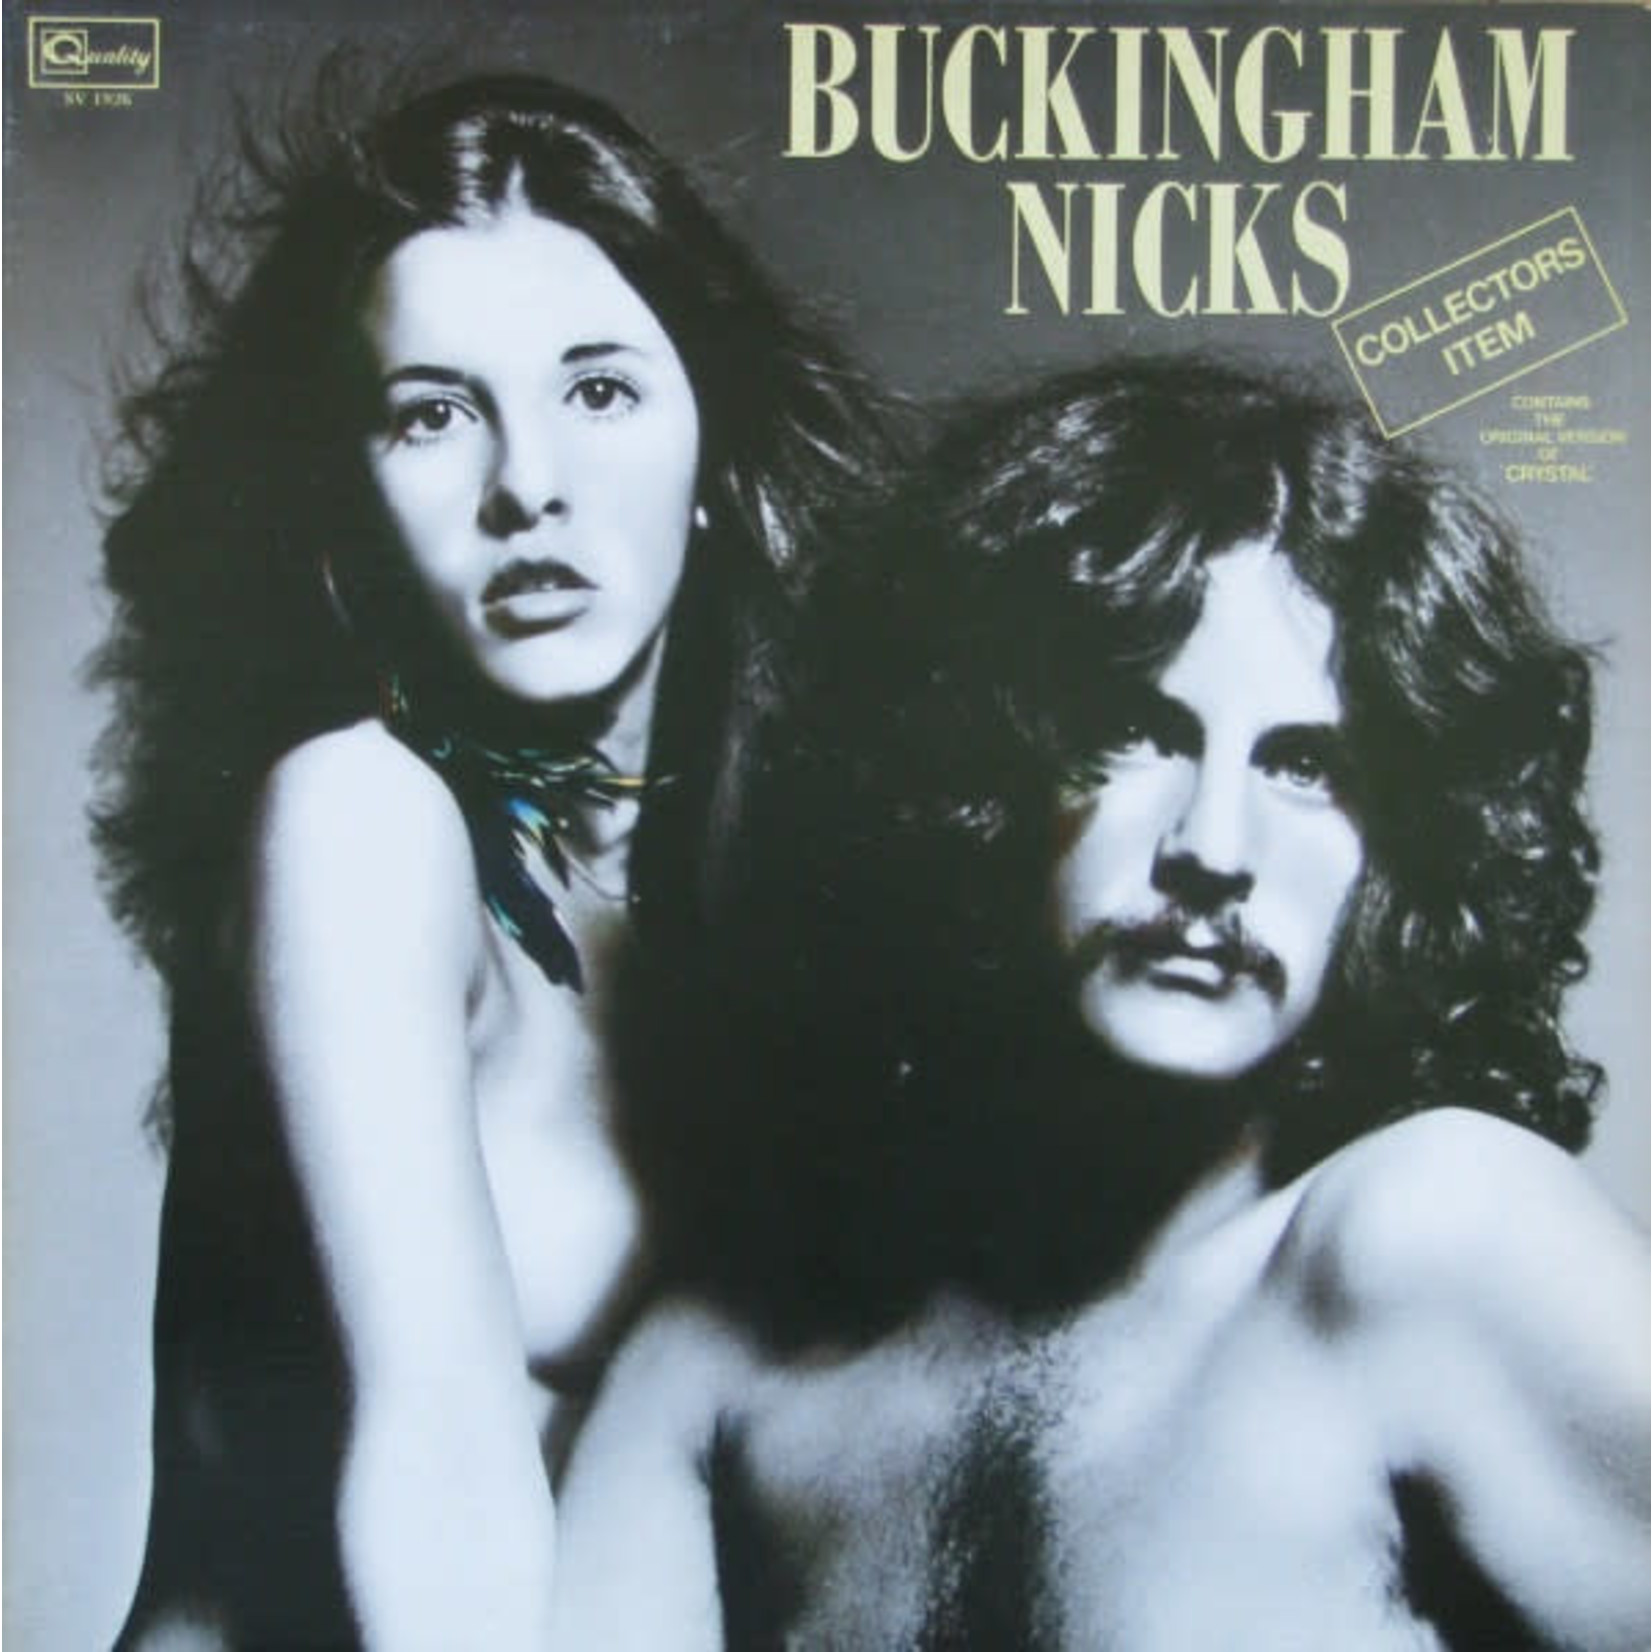 [Vintage] Buckingham Nicks (Fleetwood Mac) - Buckingham Nicks (Collector's Edition)